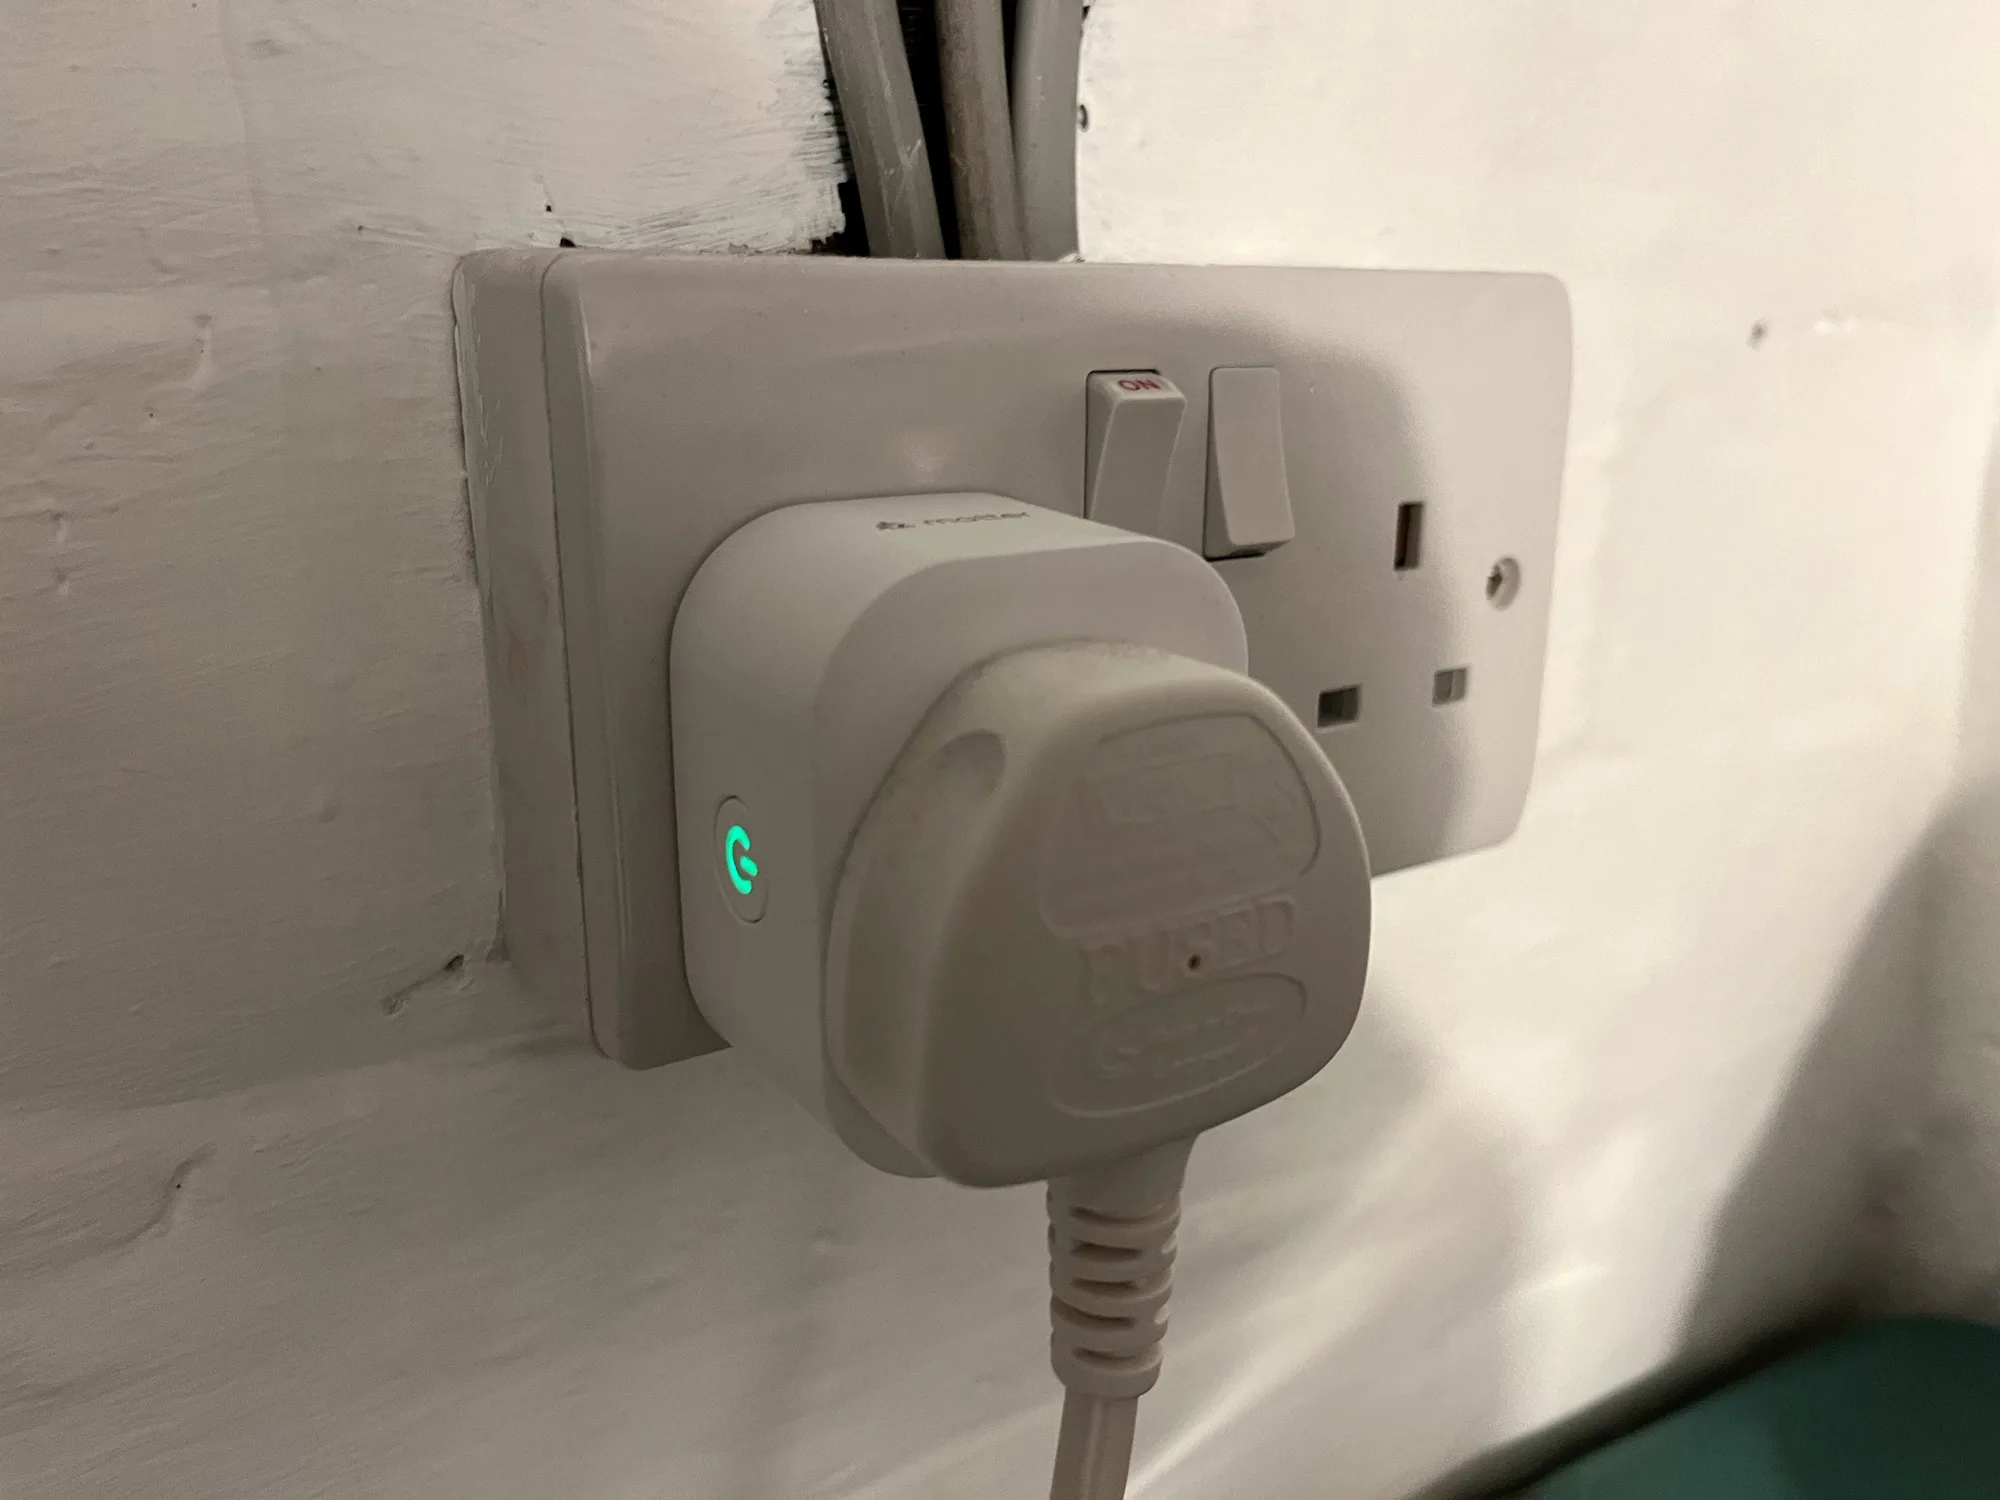 A photo of a Meross smart plug in a UK plug socket